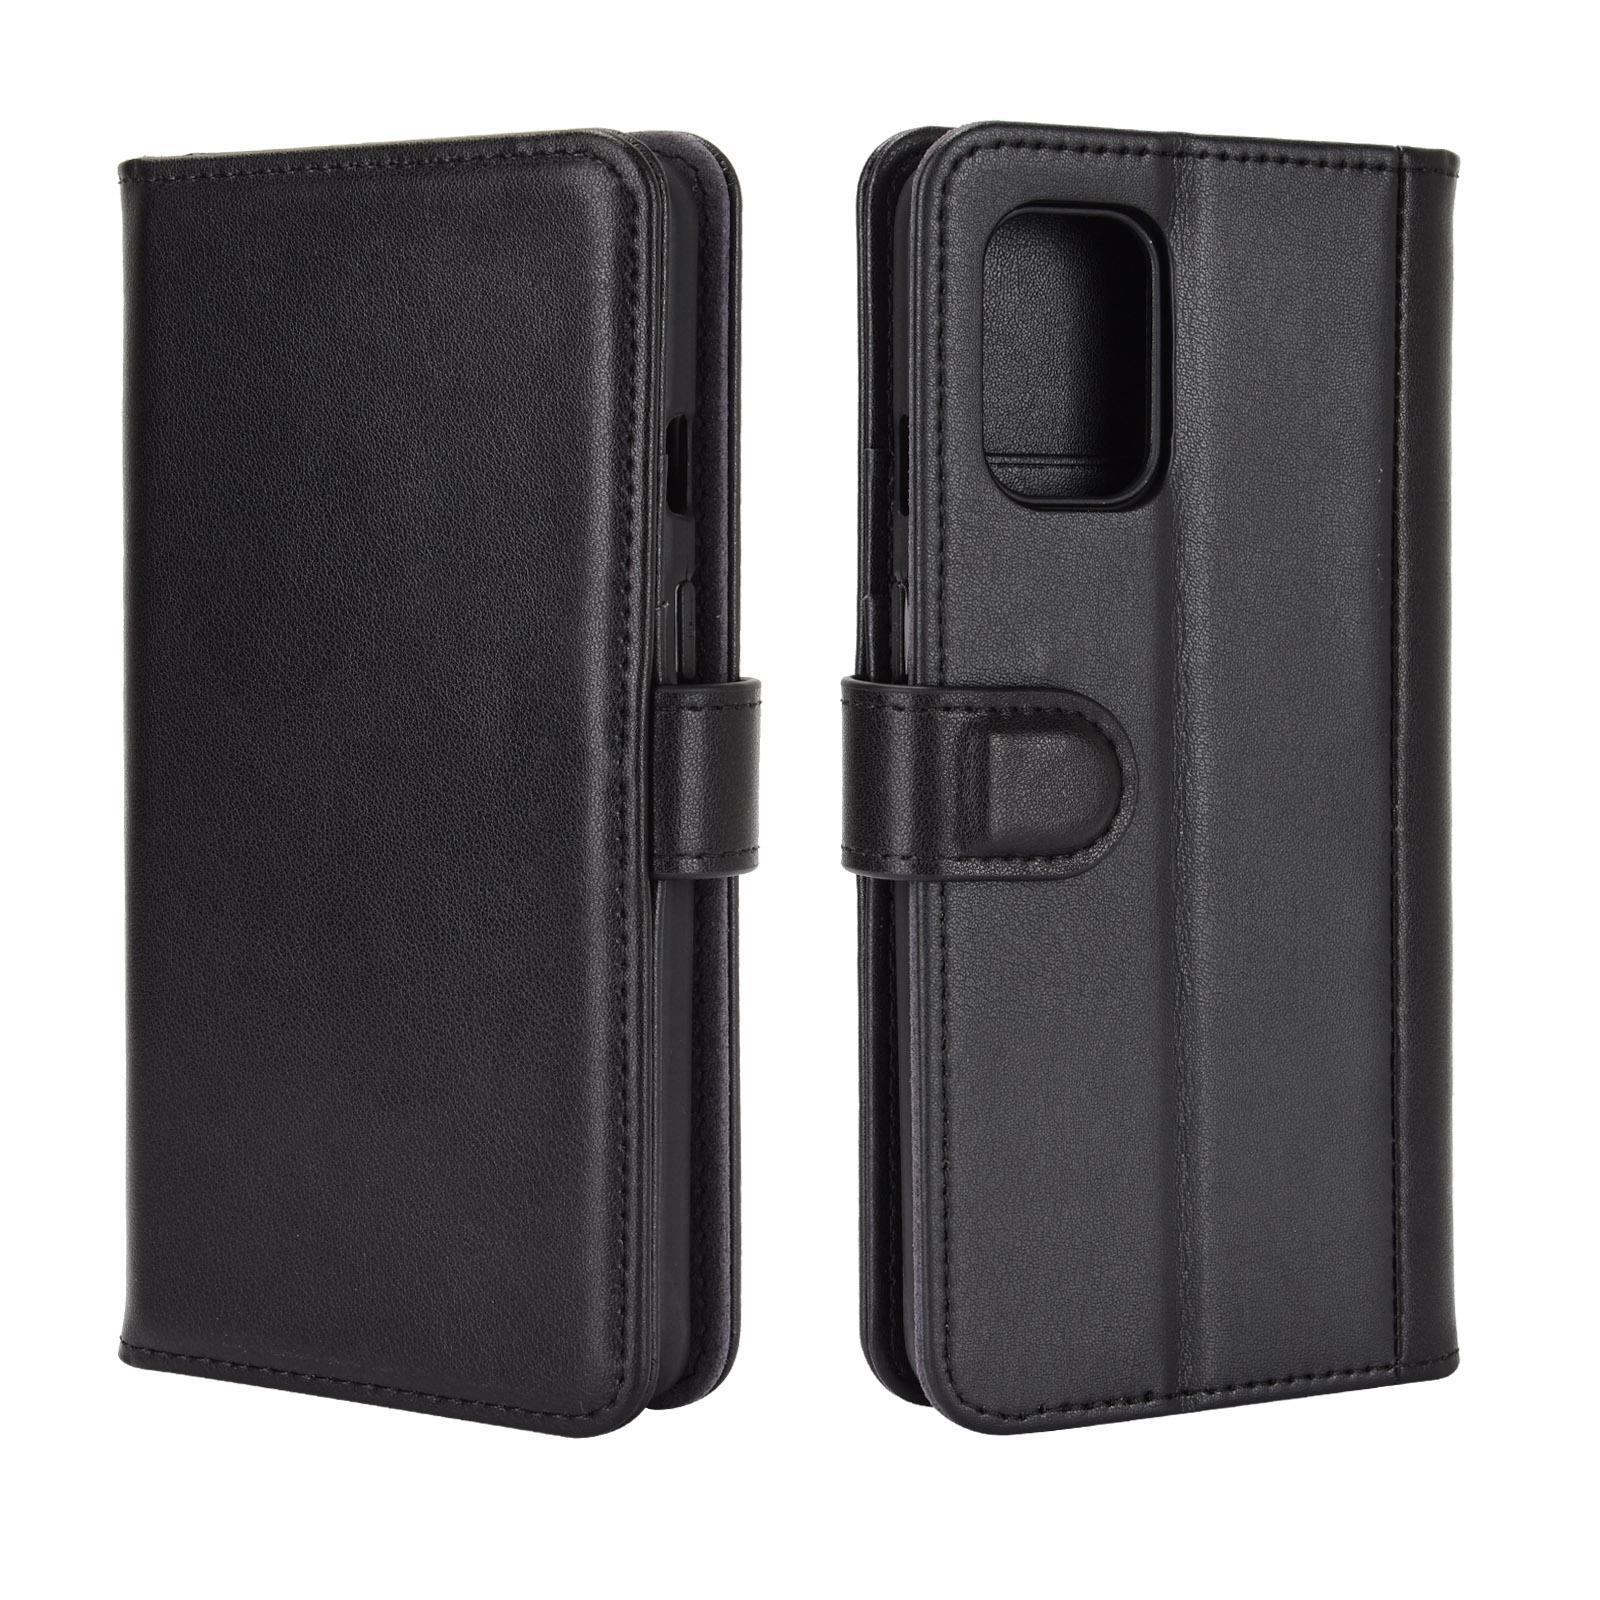 OnePlus 8T Plånboksfodral i Äkta Läder, svart